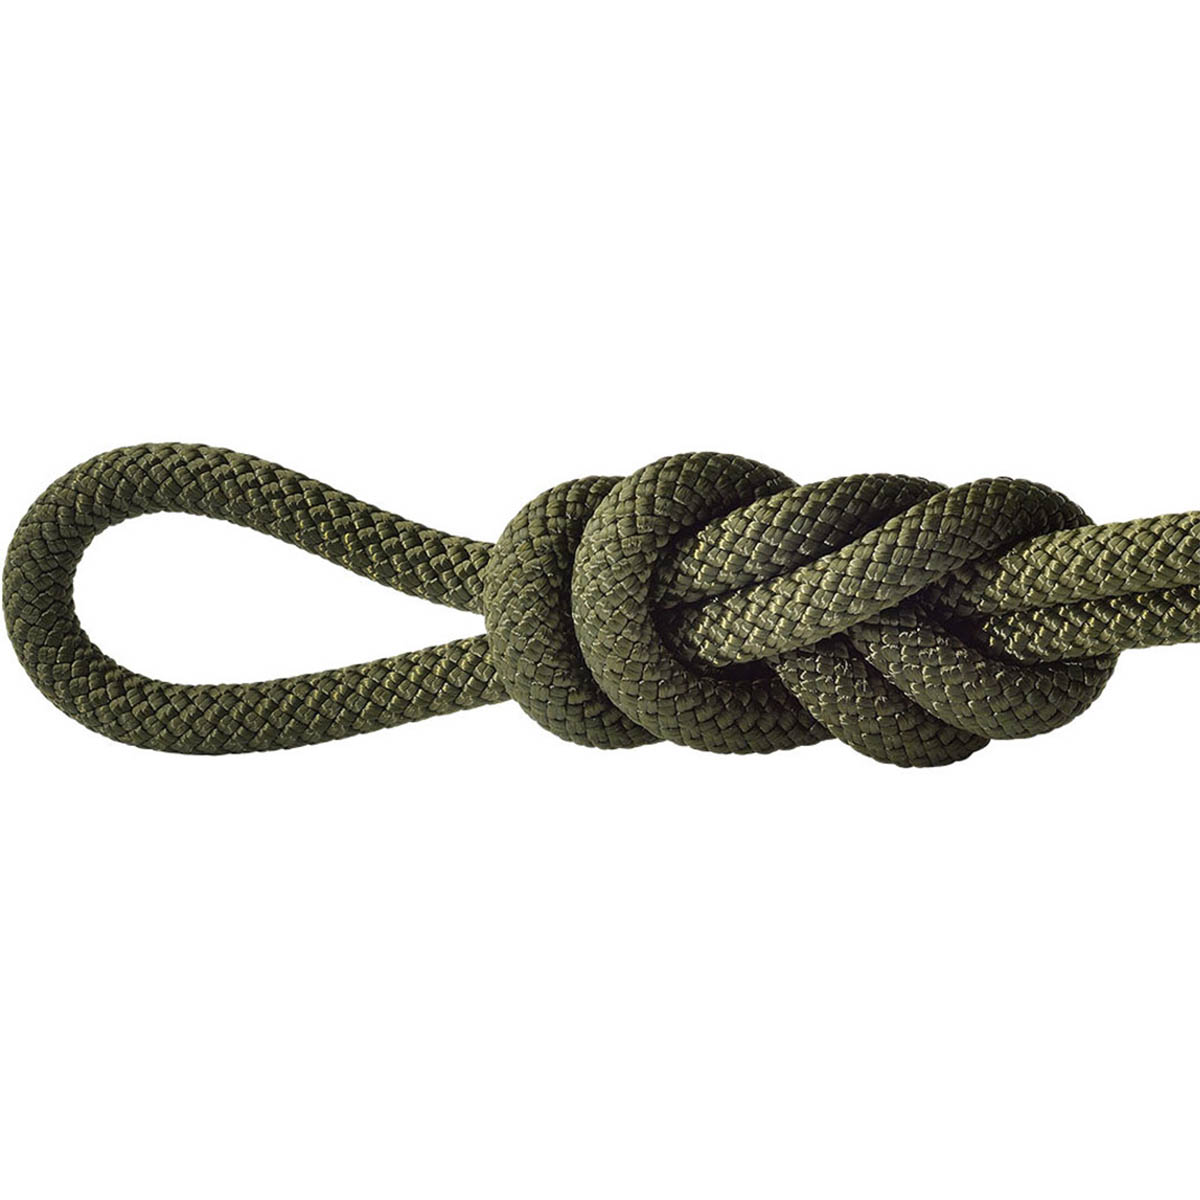 Northrock Safety / 15 Metre Static Rope singapore, kernmantle rope